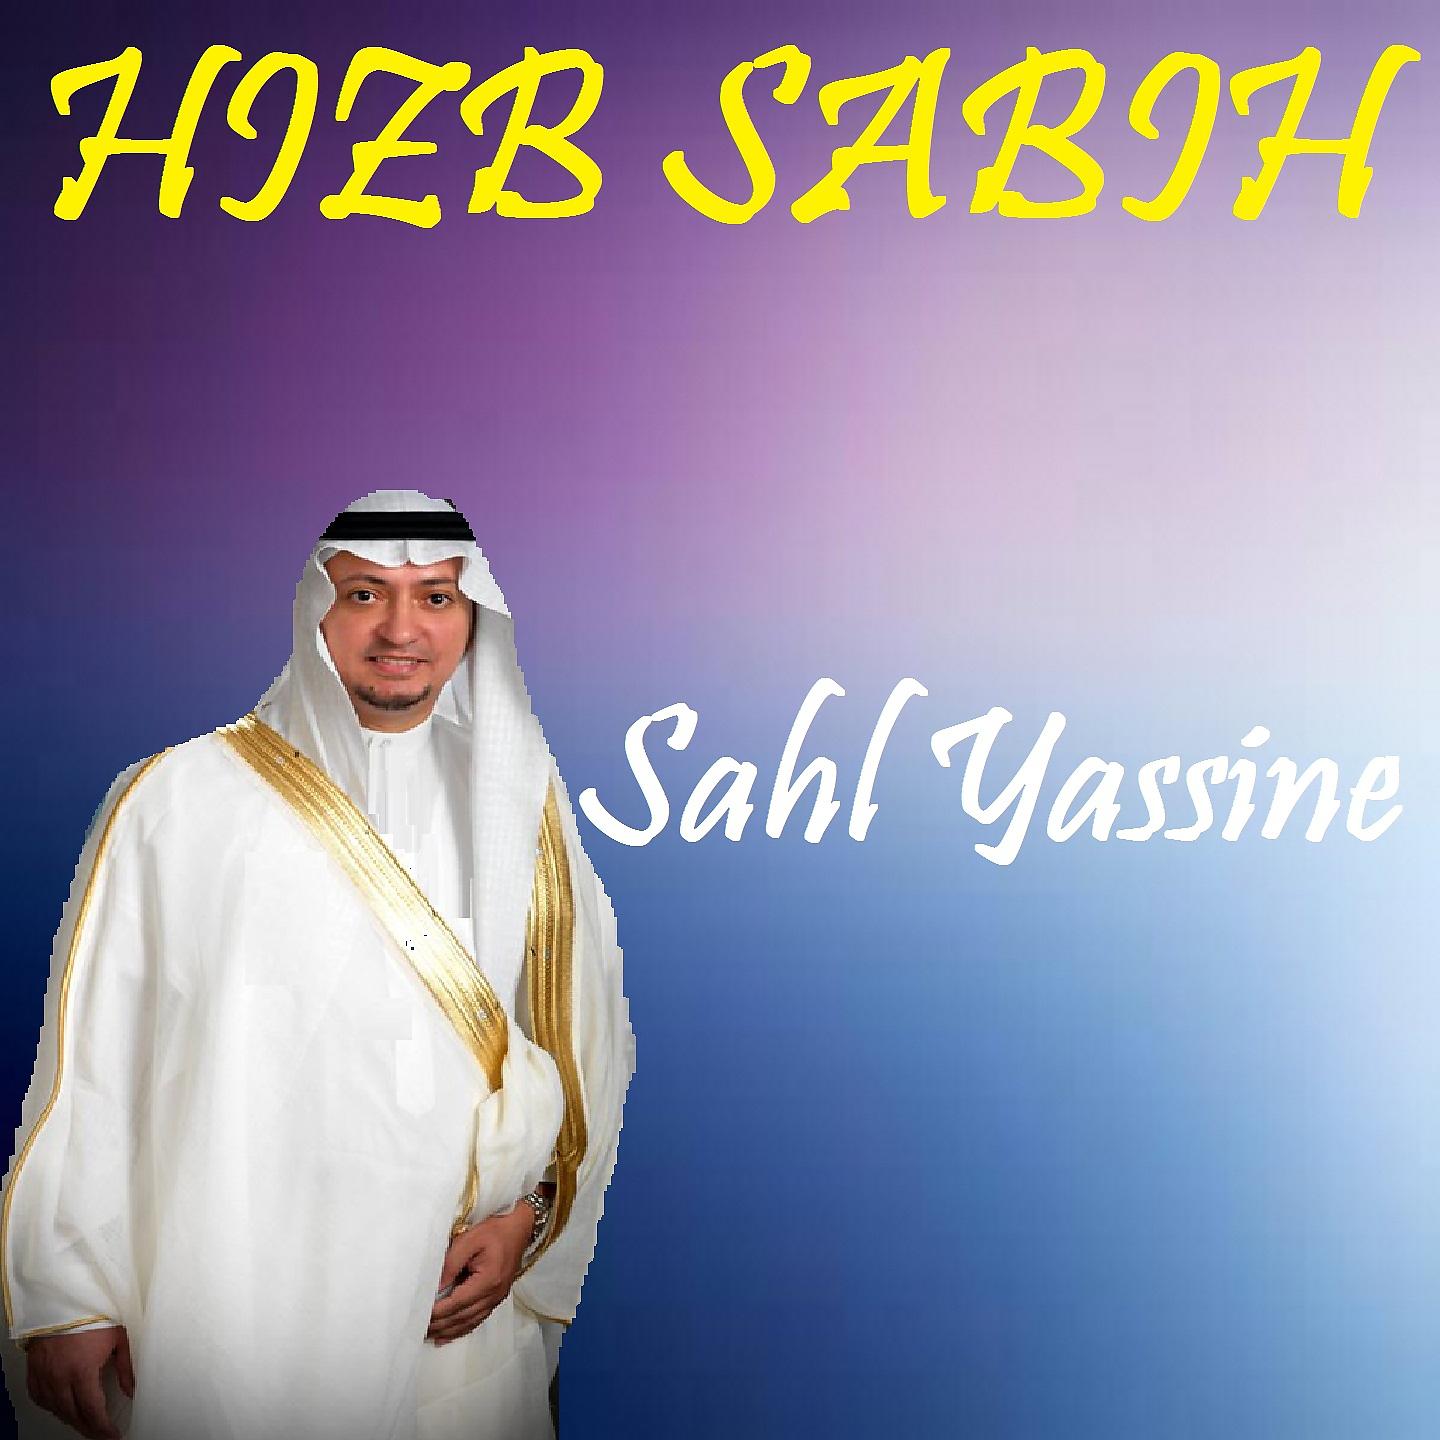 Постер альбома HIZB SABIH